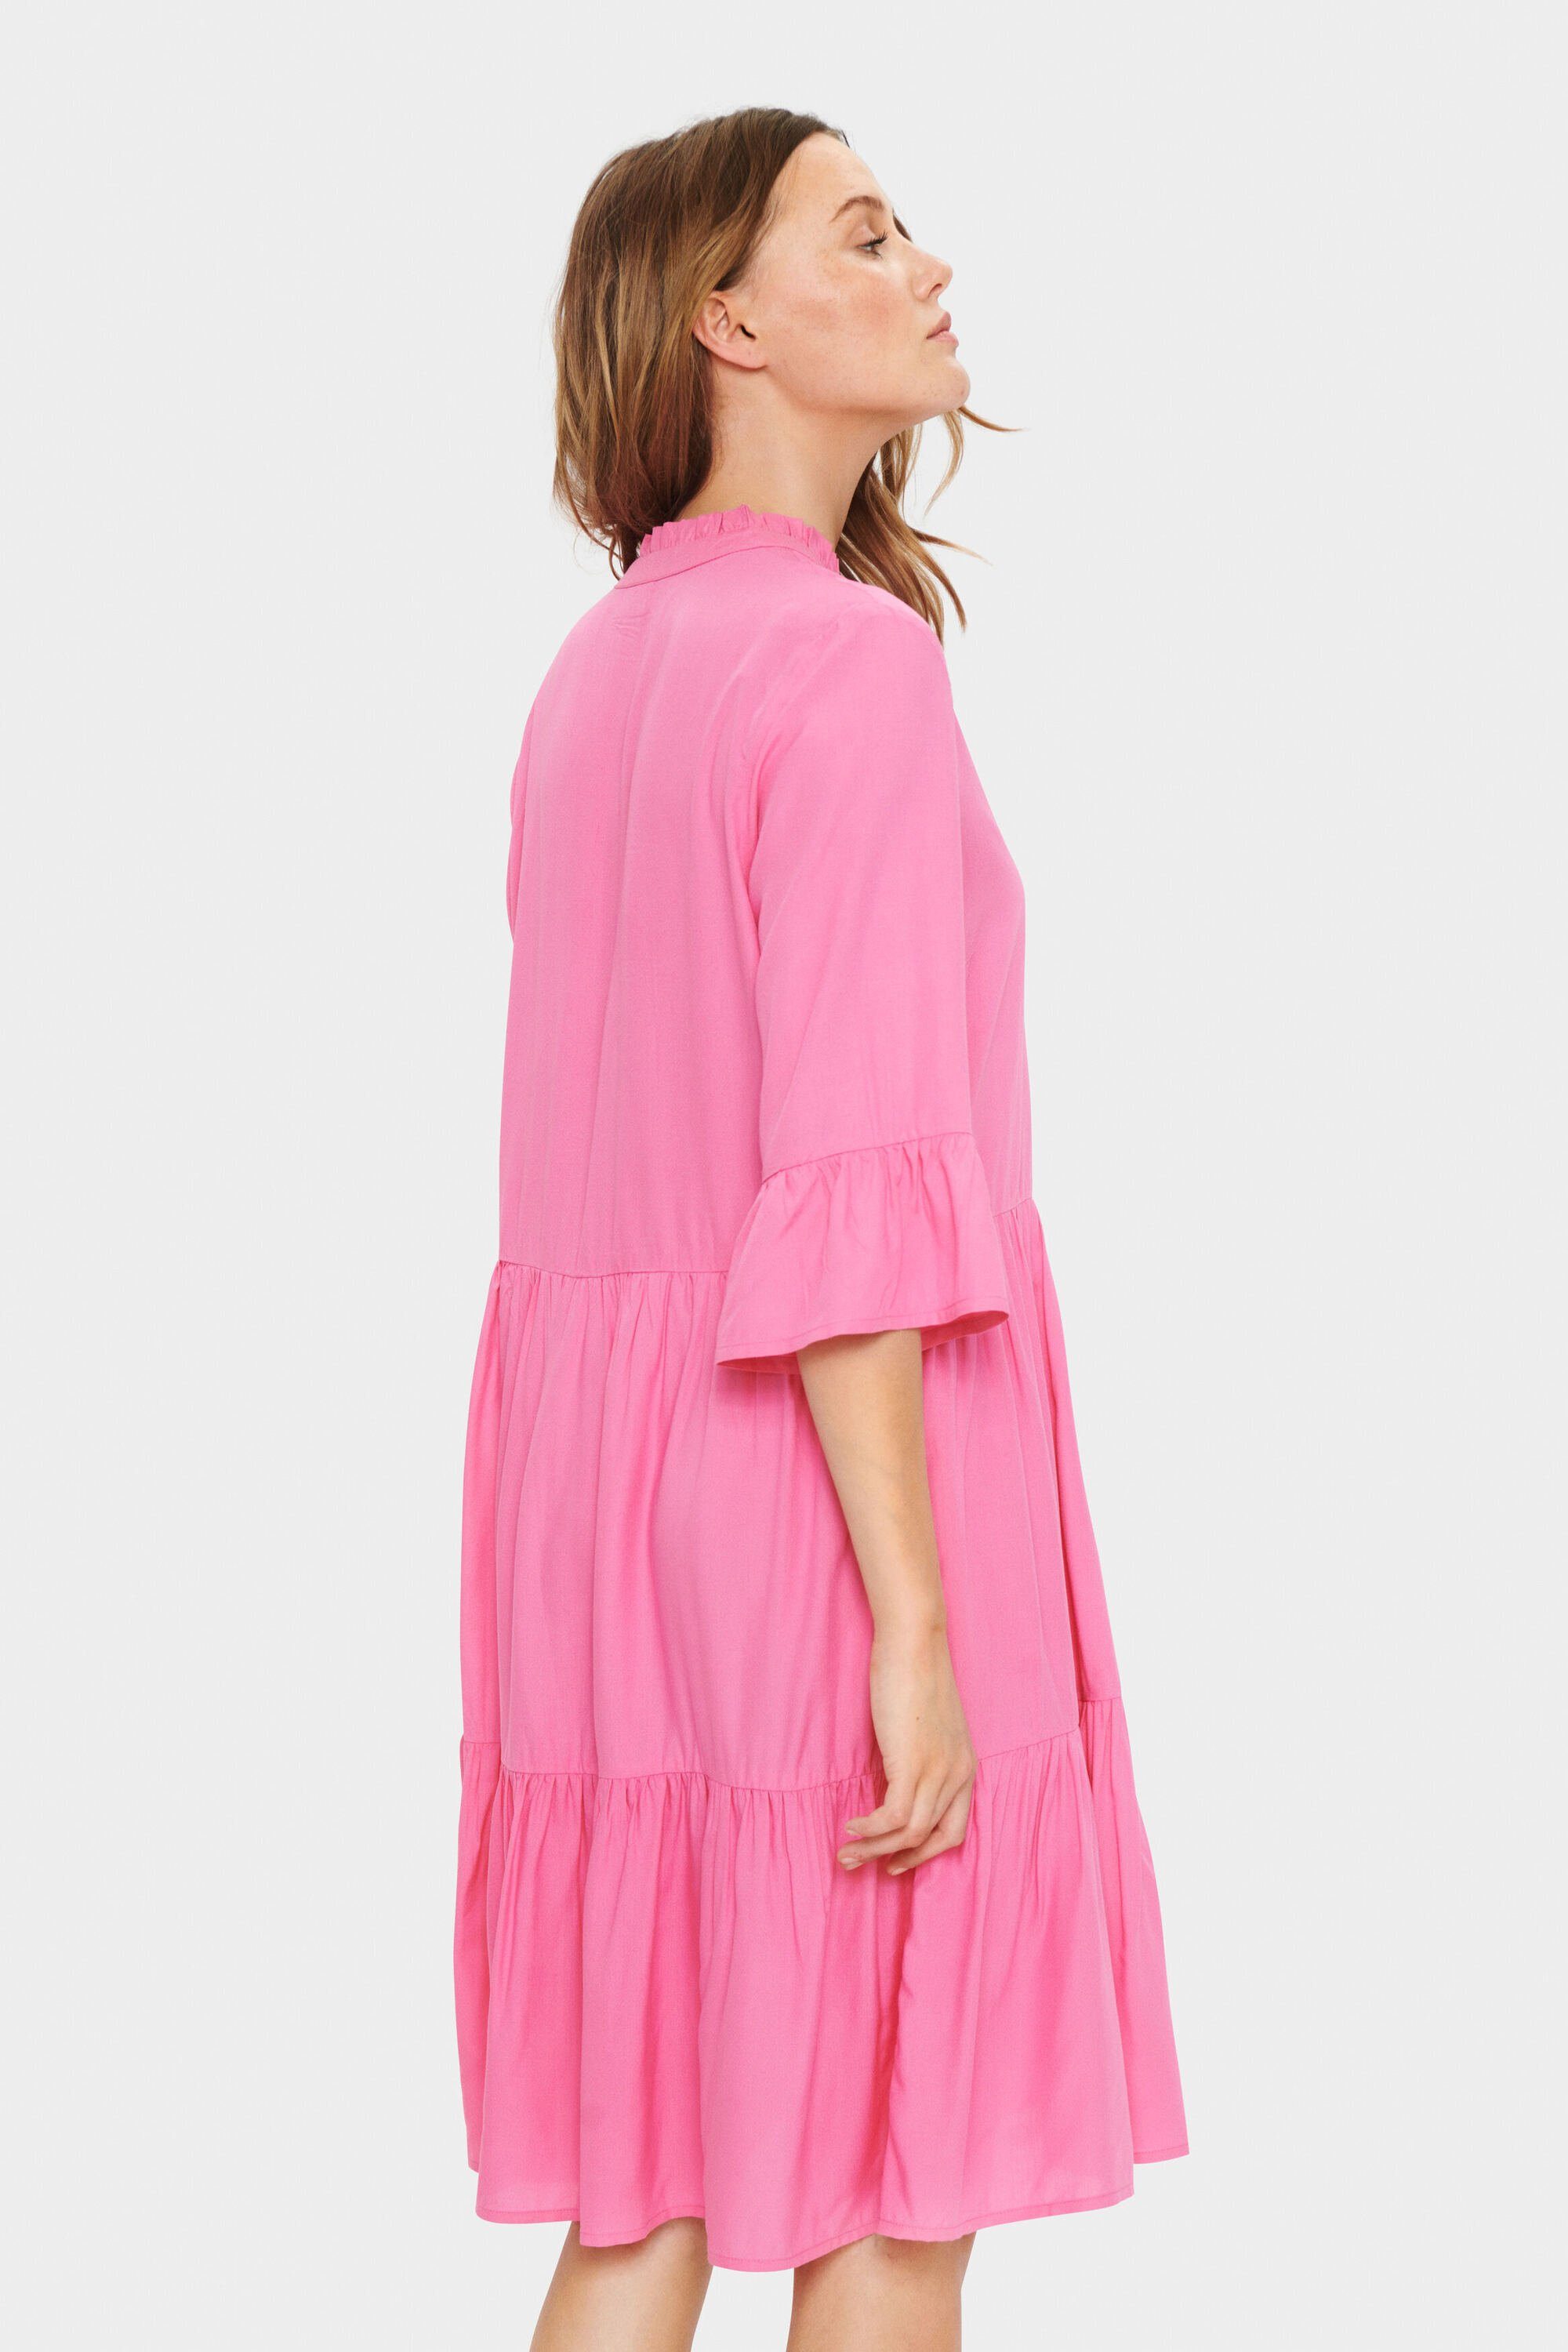 Saint Tropez Jerseykleid Kleid Pink EdaSZ Azalea